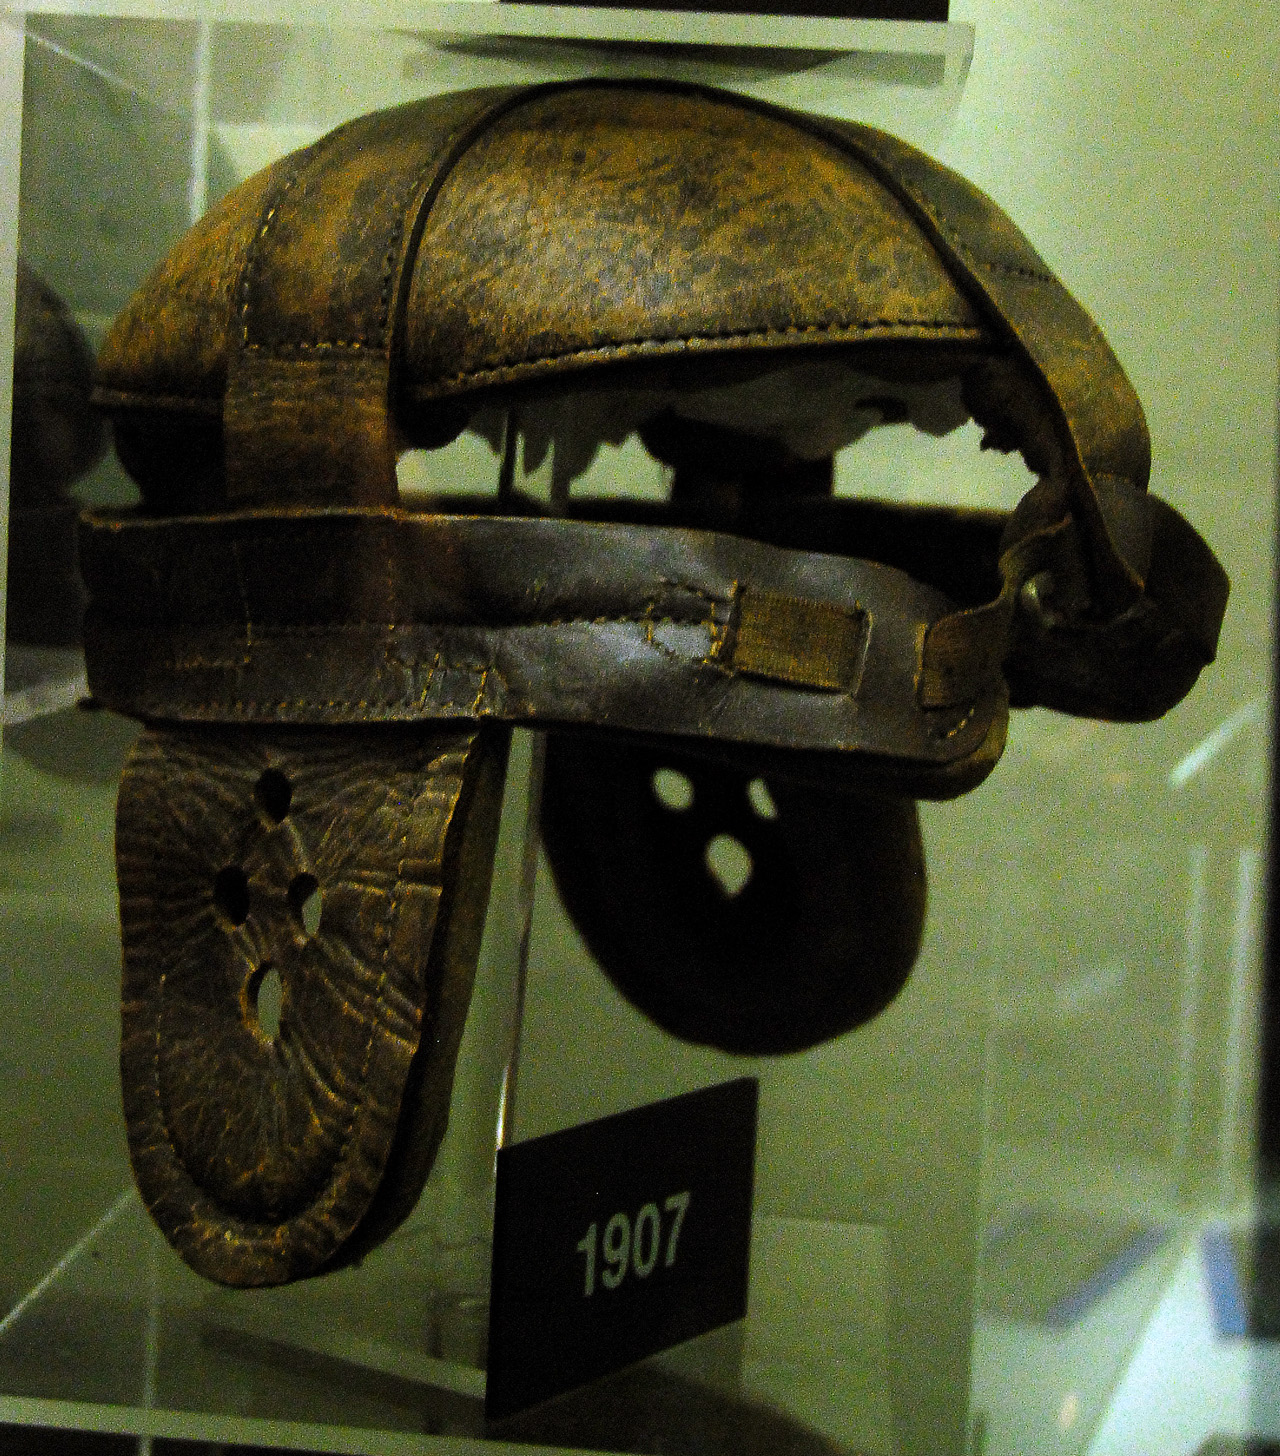 2012-04-23, 011, Helmet 1907